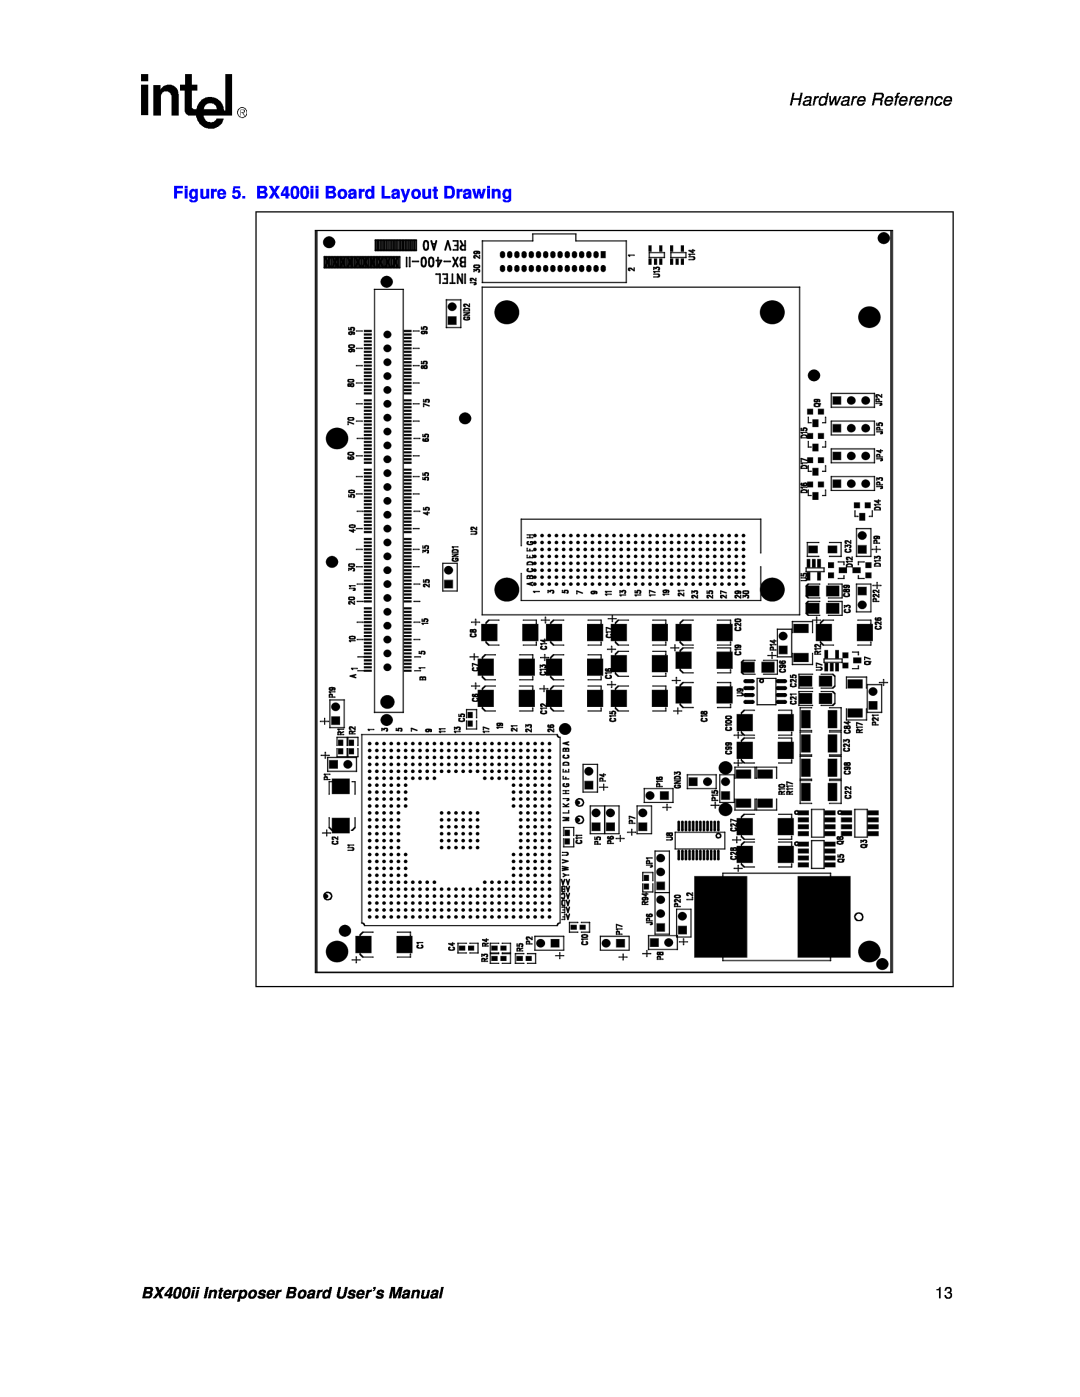 Intel BX400II user manual BX400ii Board Layout Drawing, Hardware Reference 